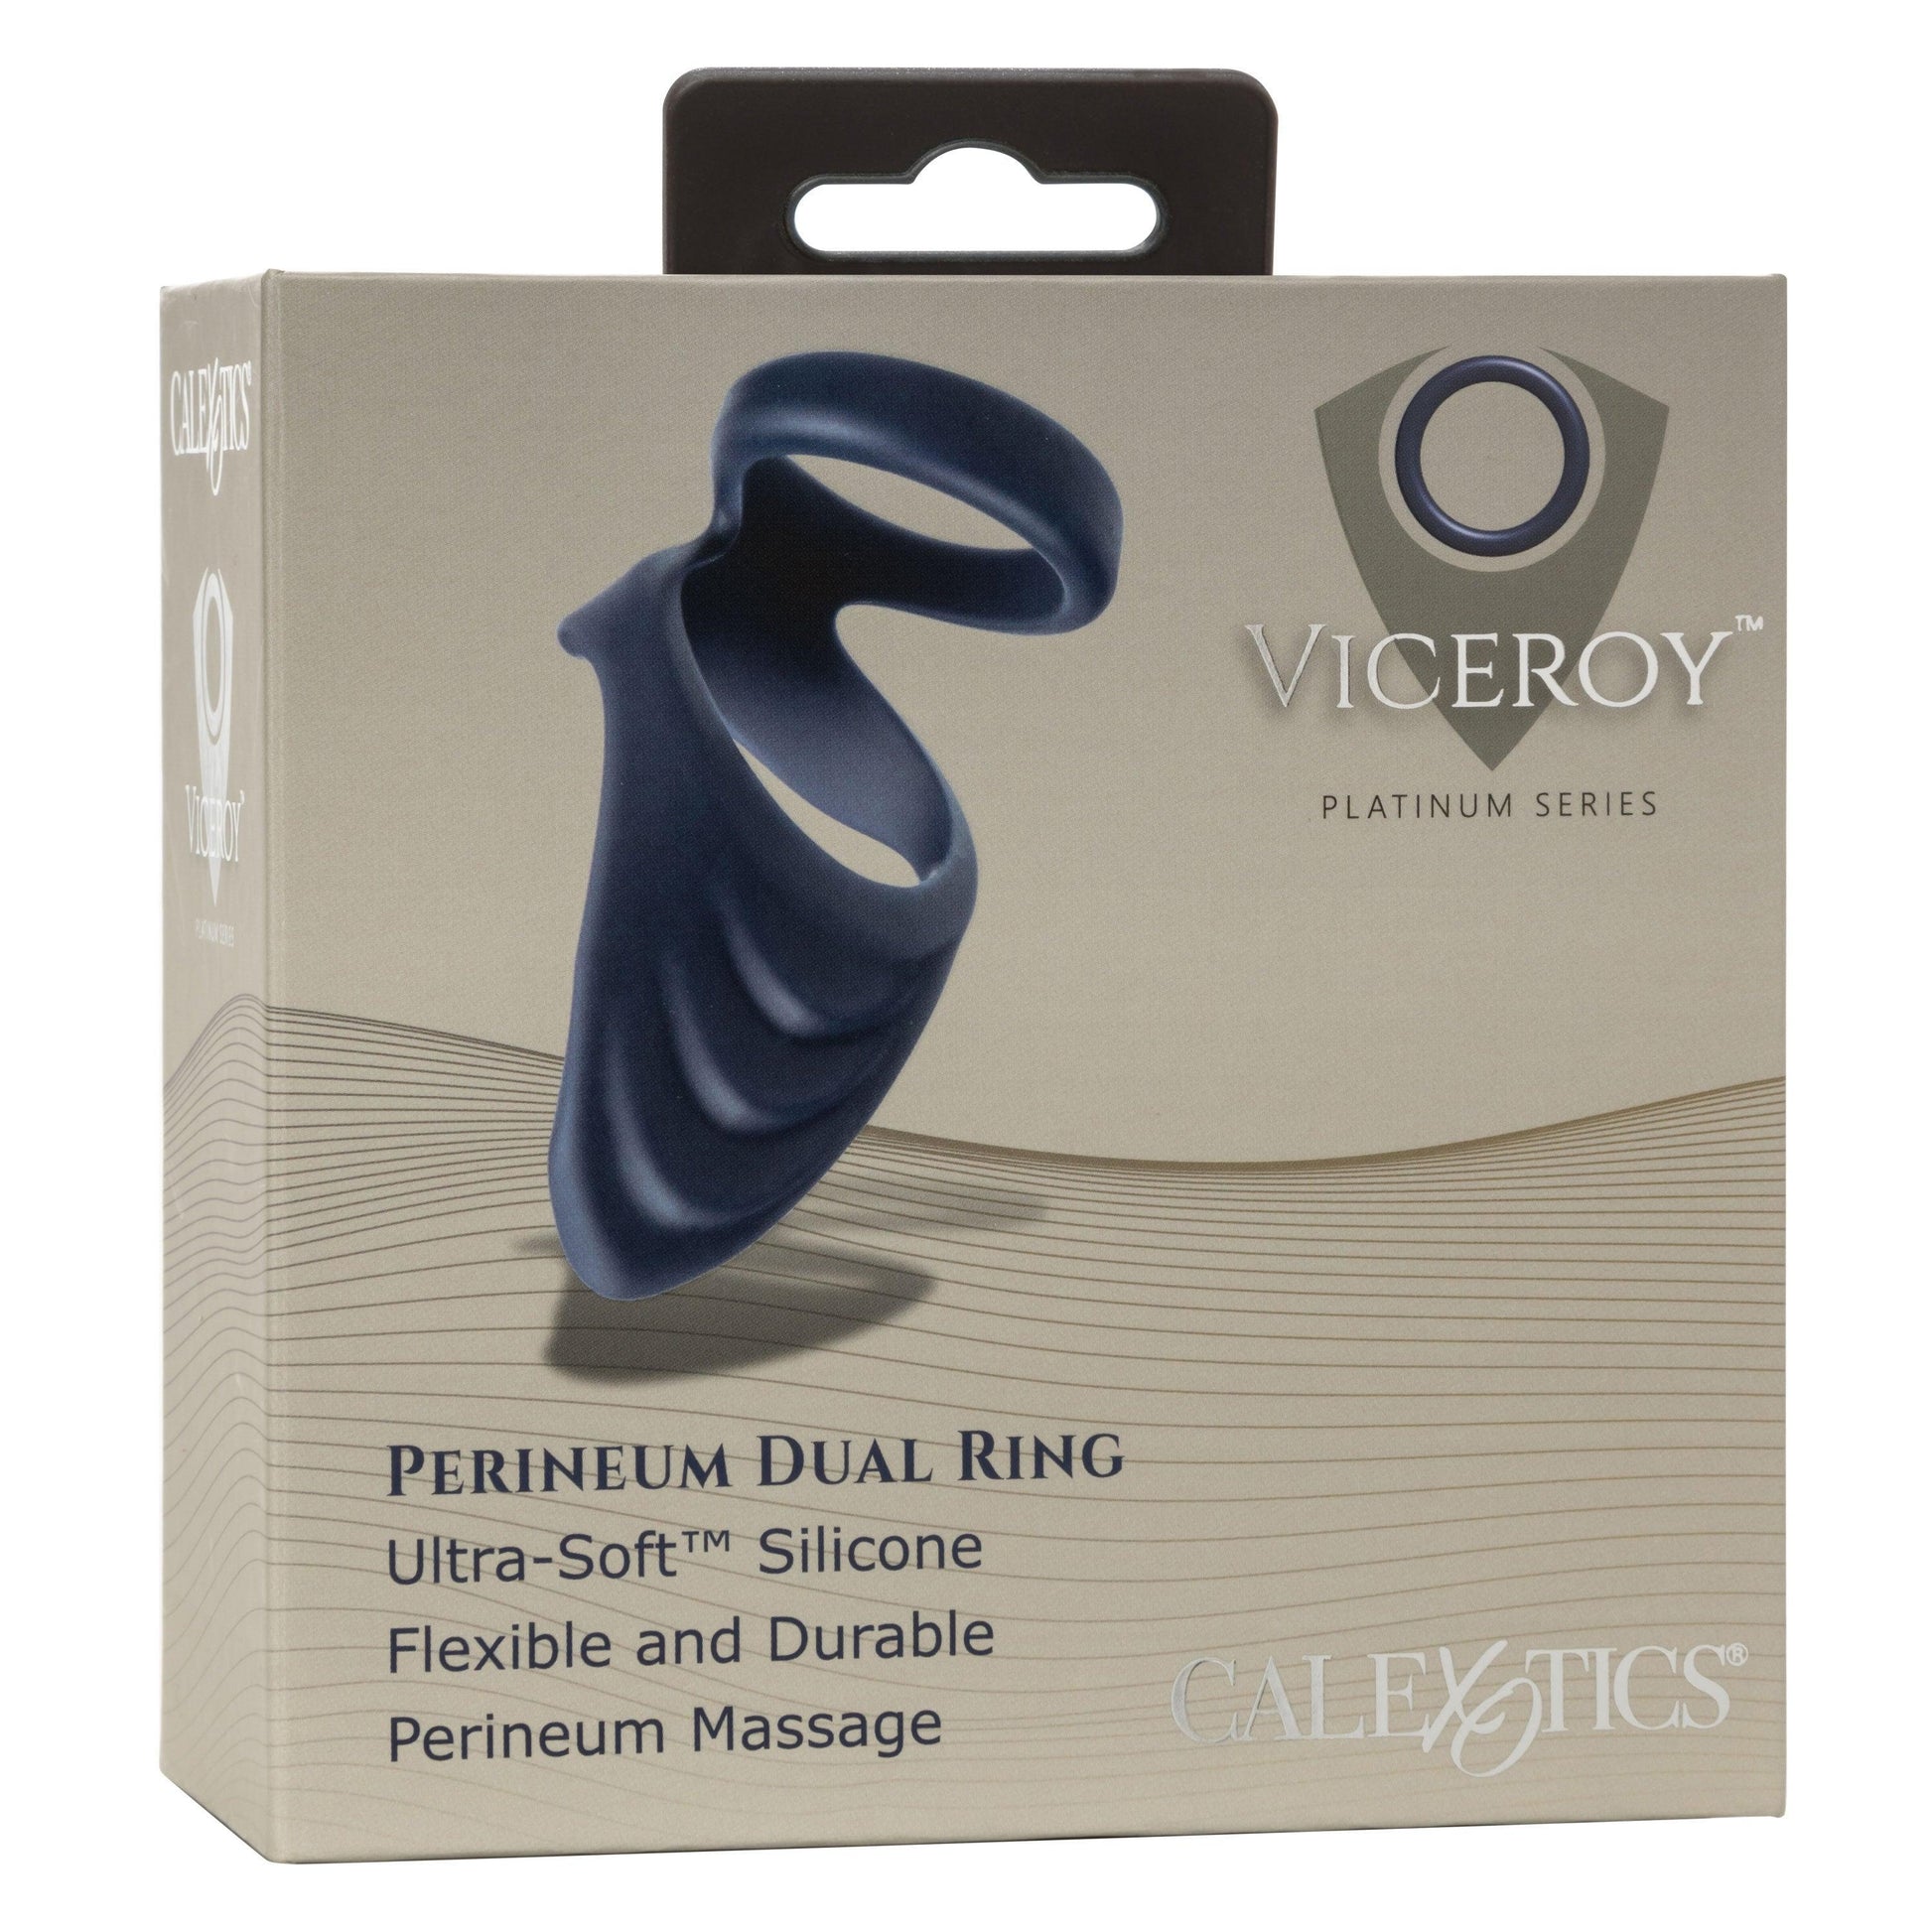 Viceroy Perineum Dual Ring - My Sex Toy Hub